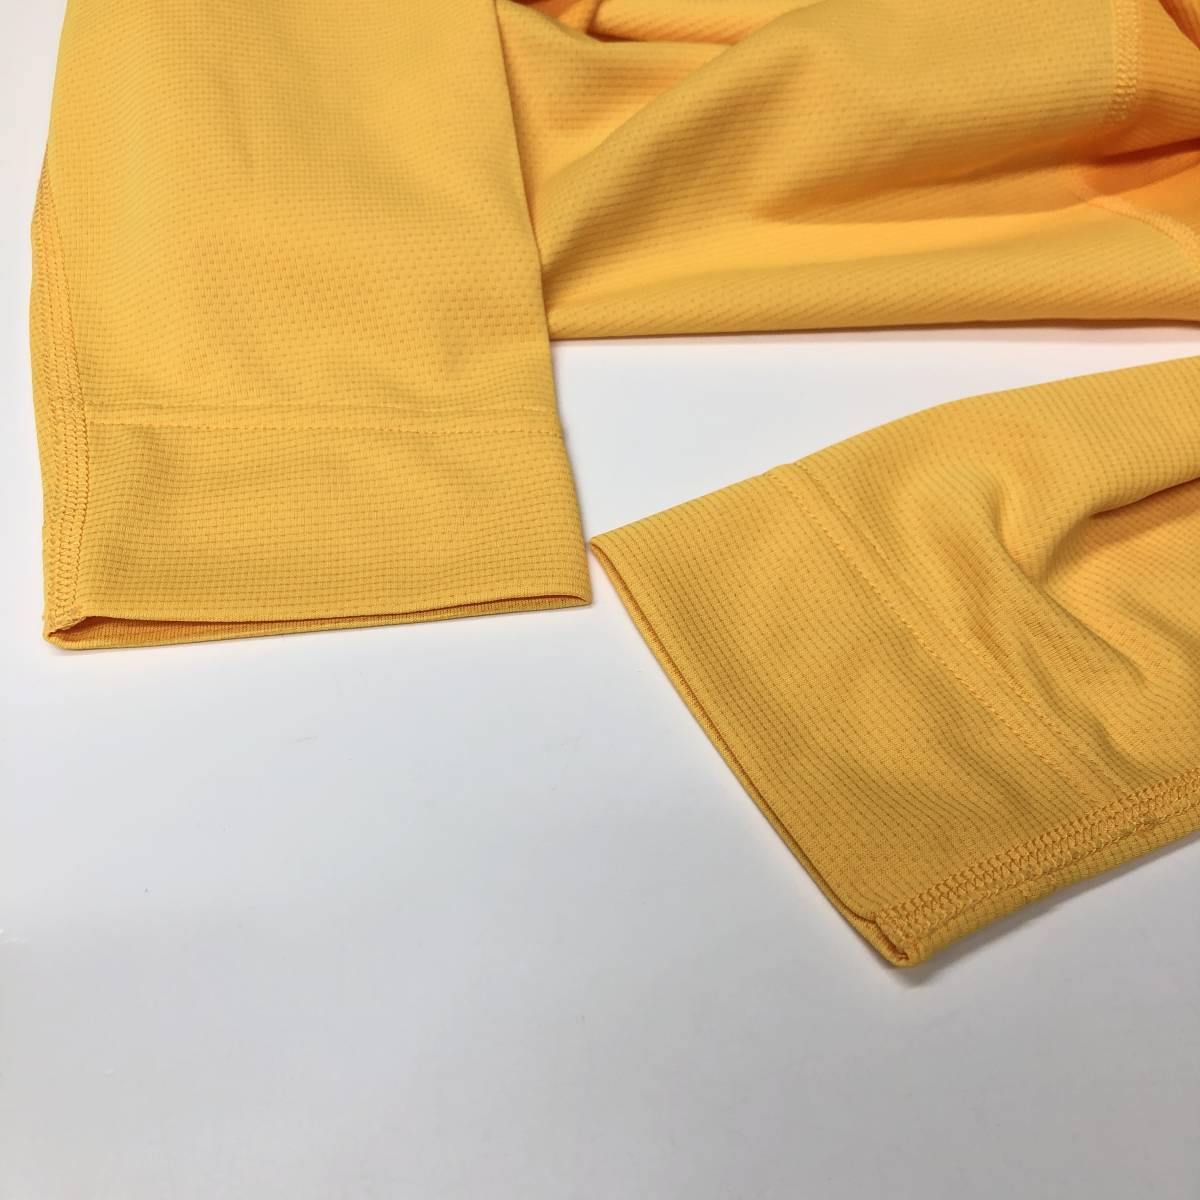  Mont Bell mont-bell 1104931 прохладный длинный рукав Zip рубашка женский L размер желтый orange серия 